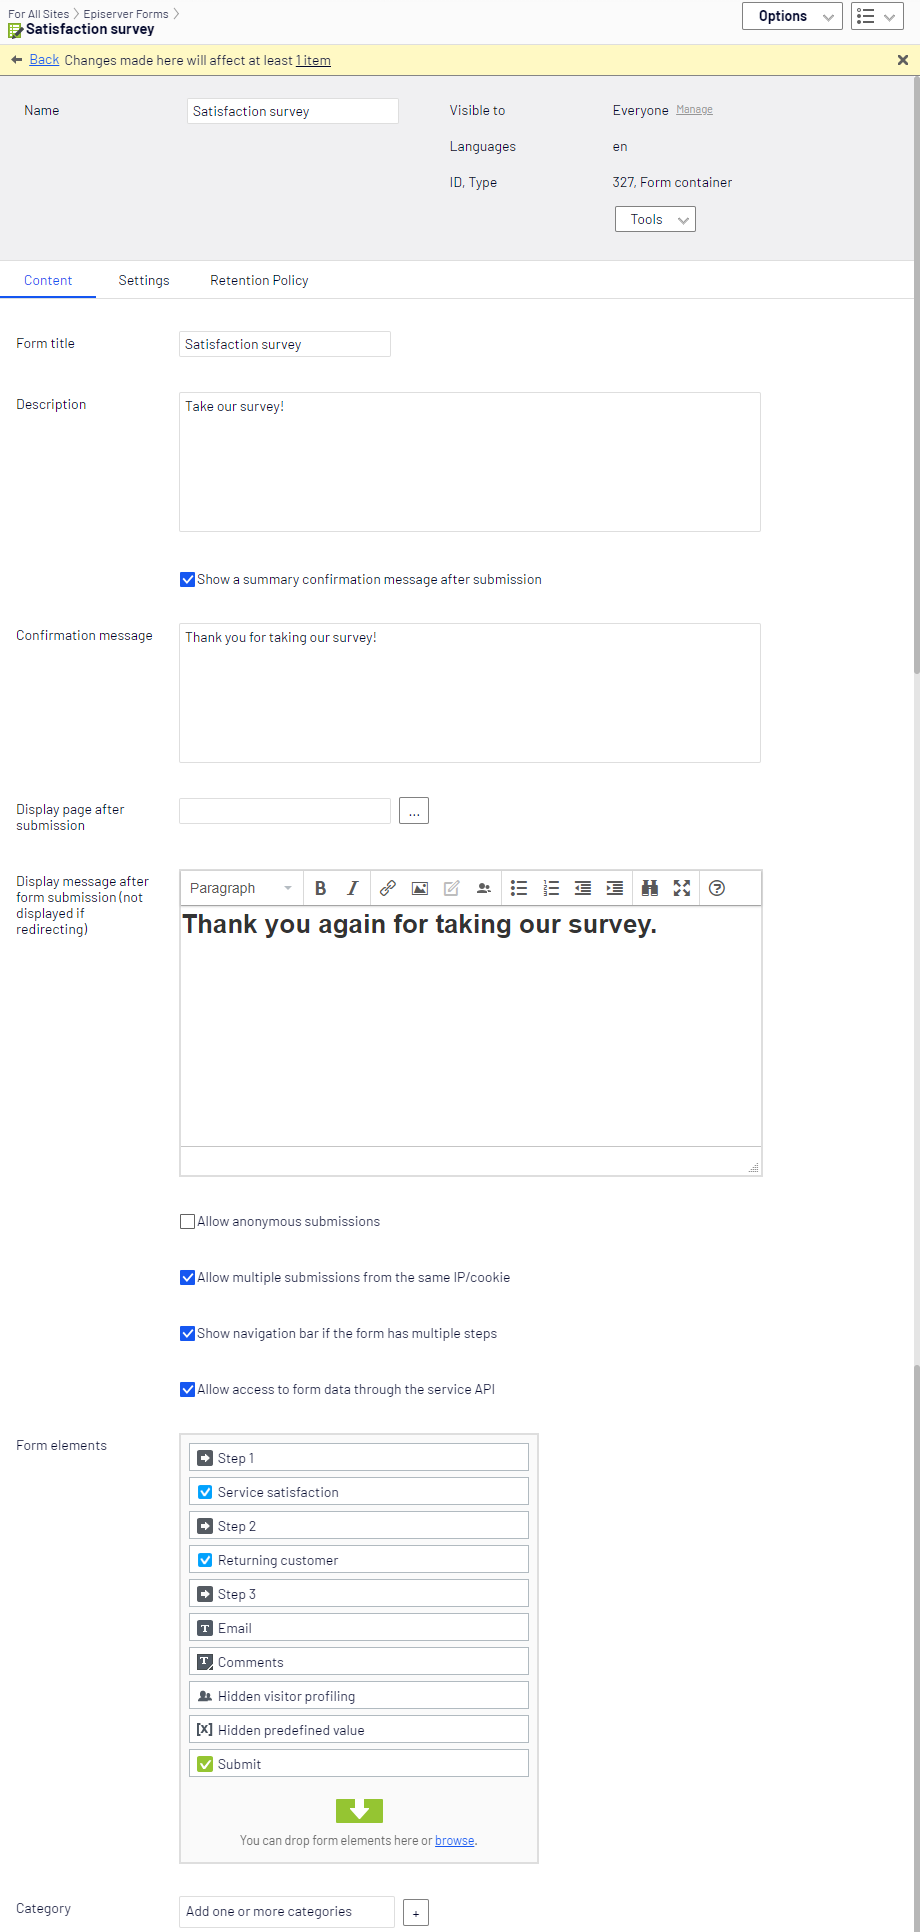 Image: Satisfaction survey metadata